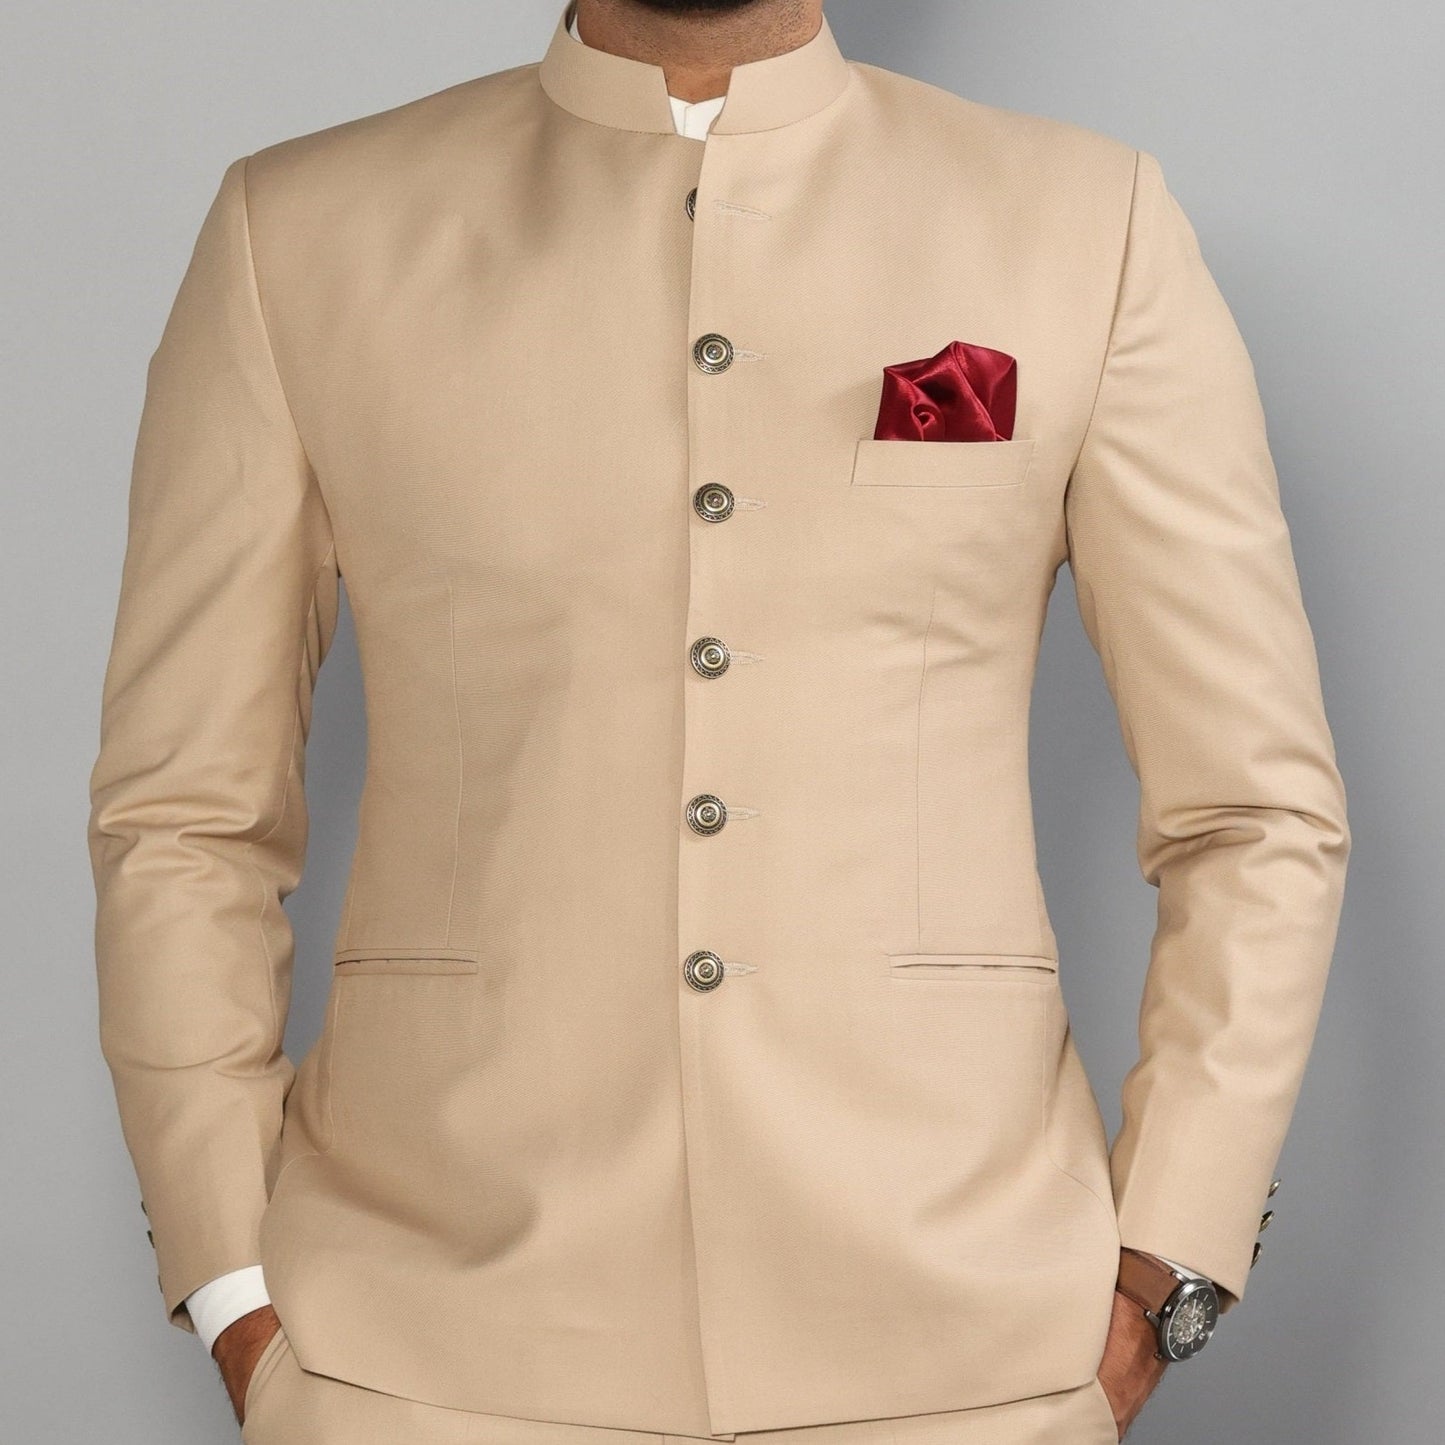 Rajanyas Traditional Khaki Jodhpuri Suit| Perfect for Wedding and Festive wear|